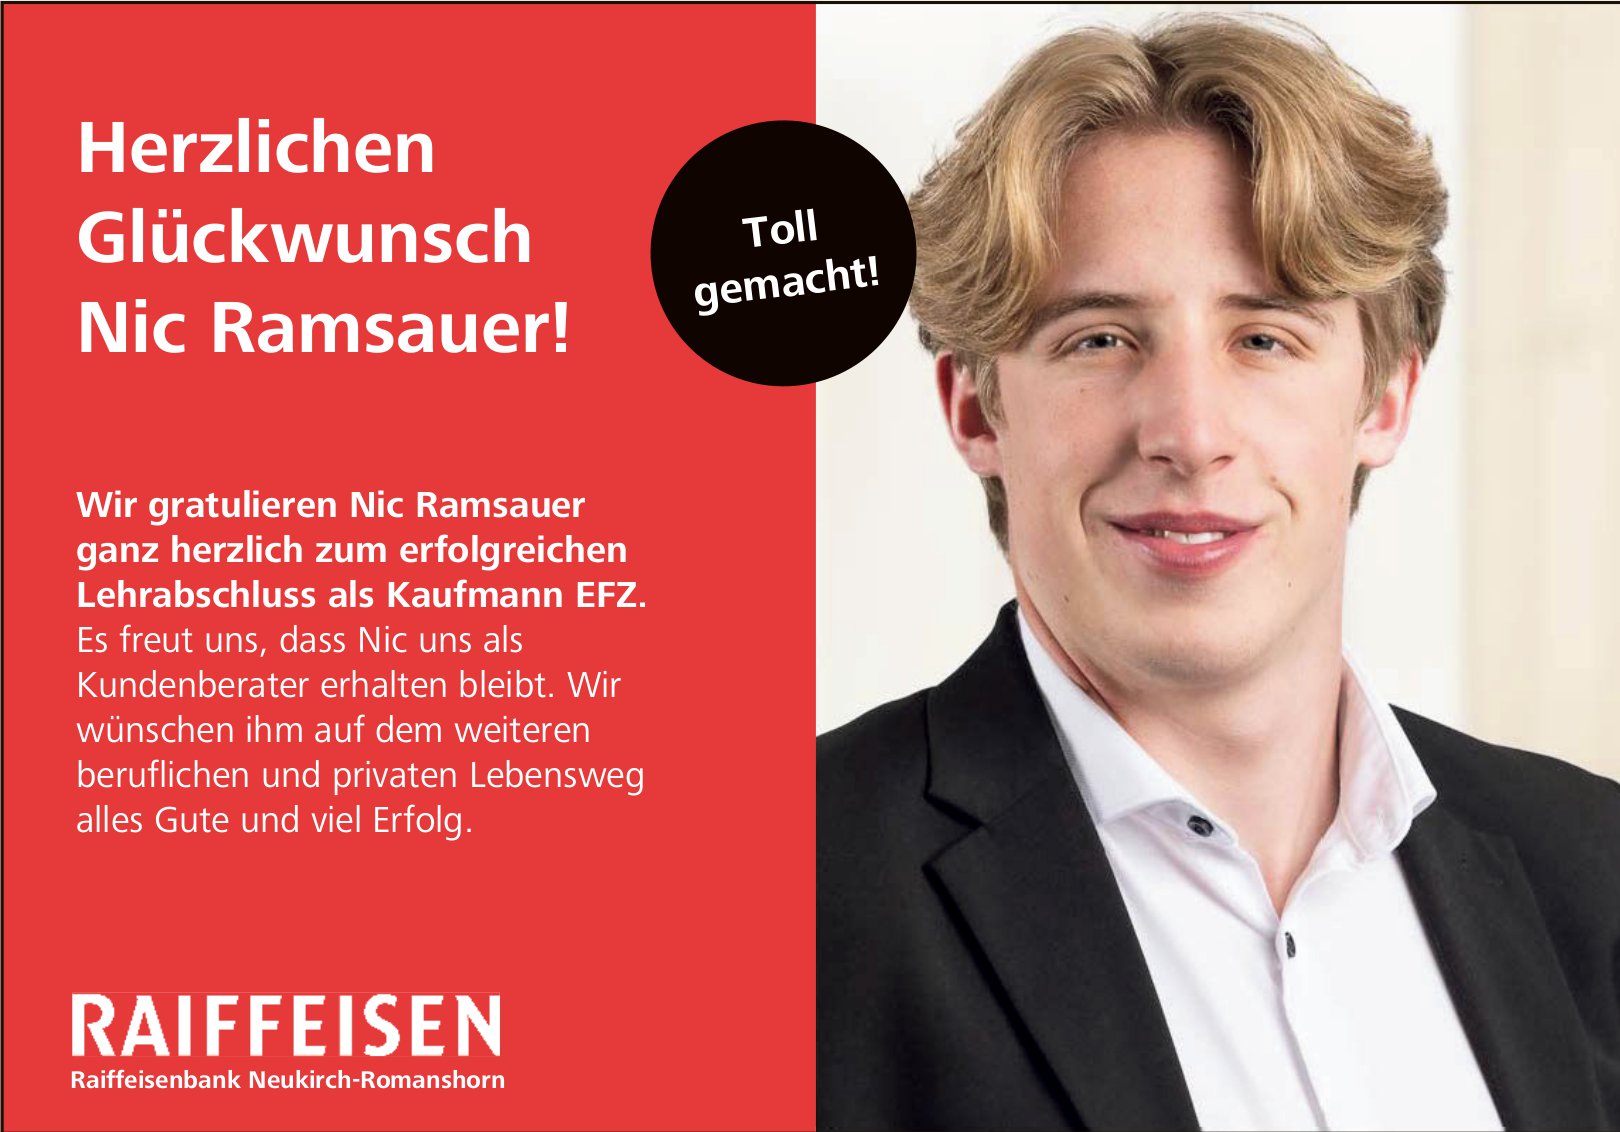 Raiffeisenbank Neukirch-Romanshorn, Herzlichen Glückwunsch Nic Ramsauer!